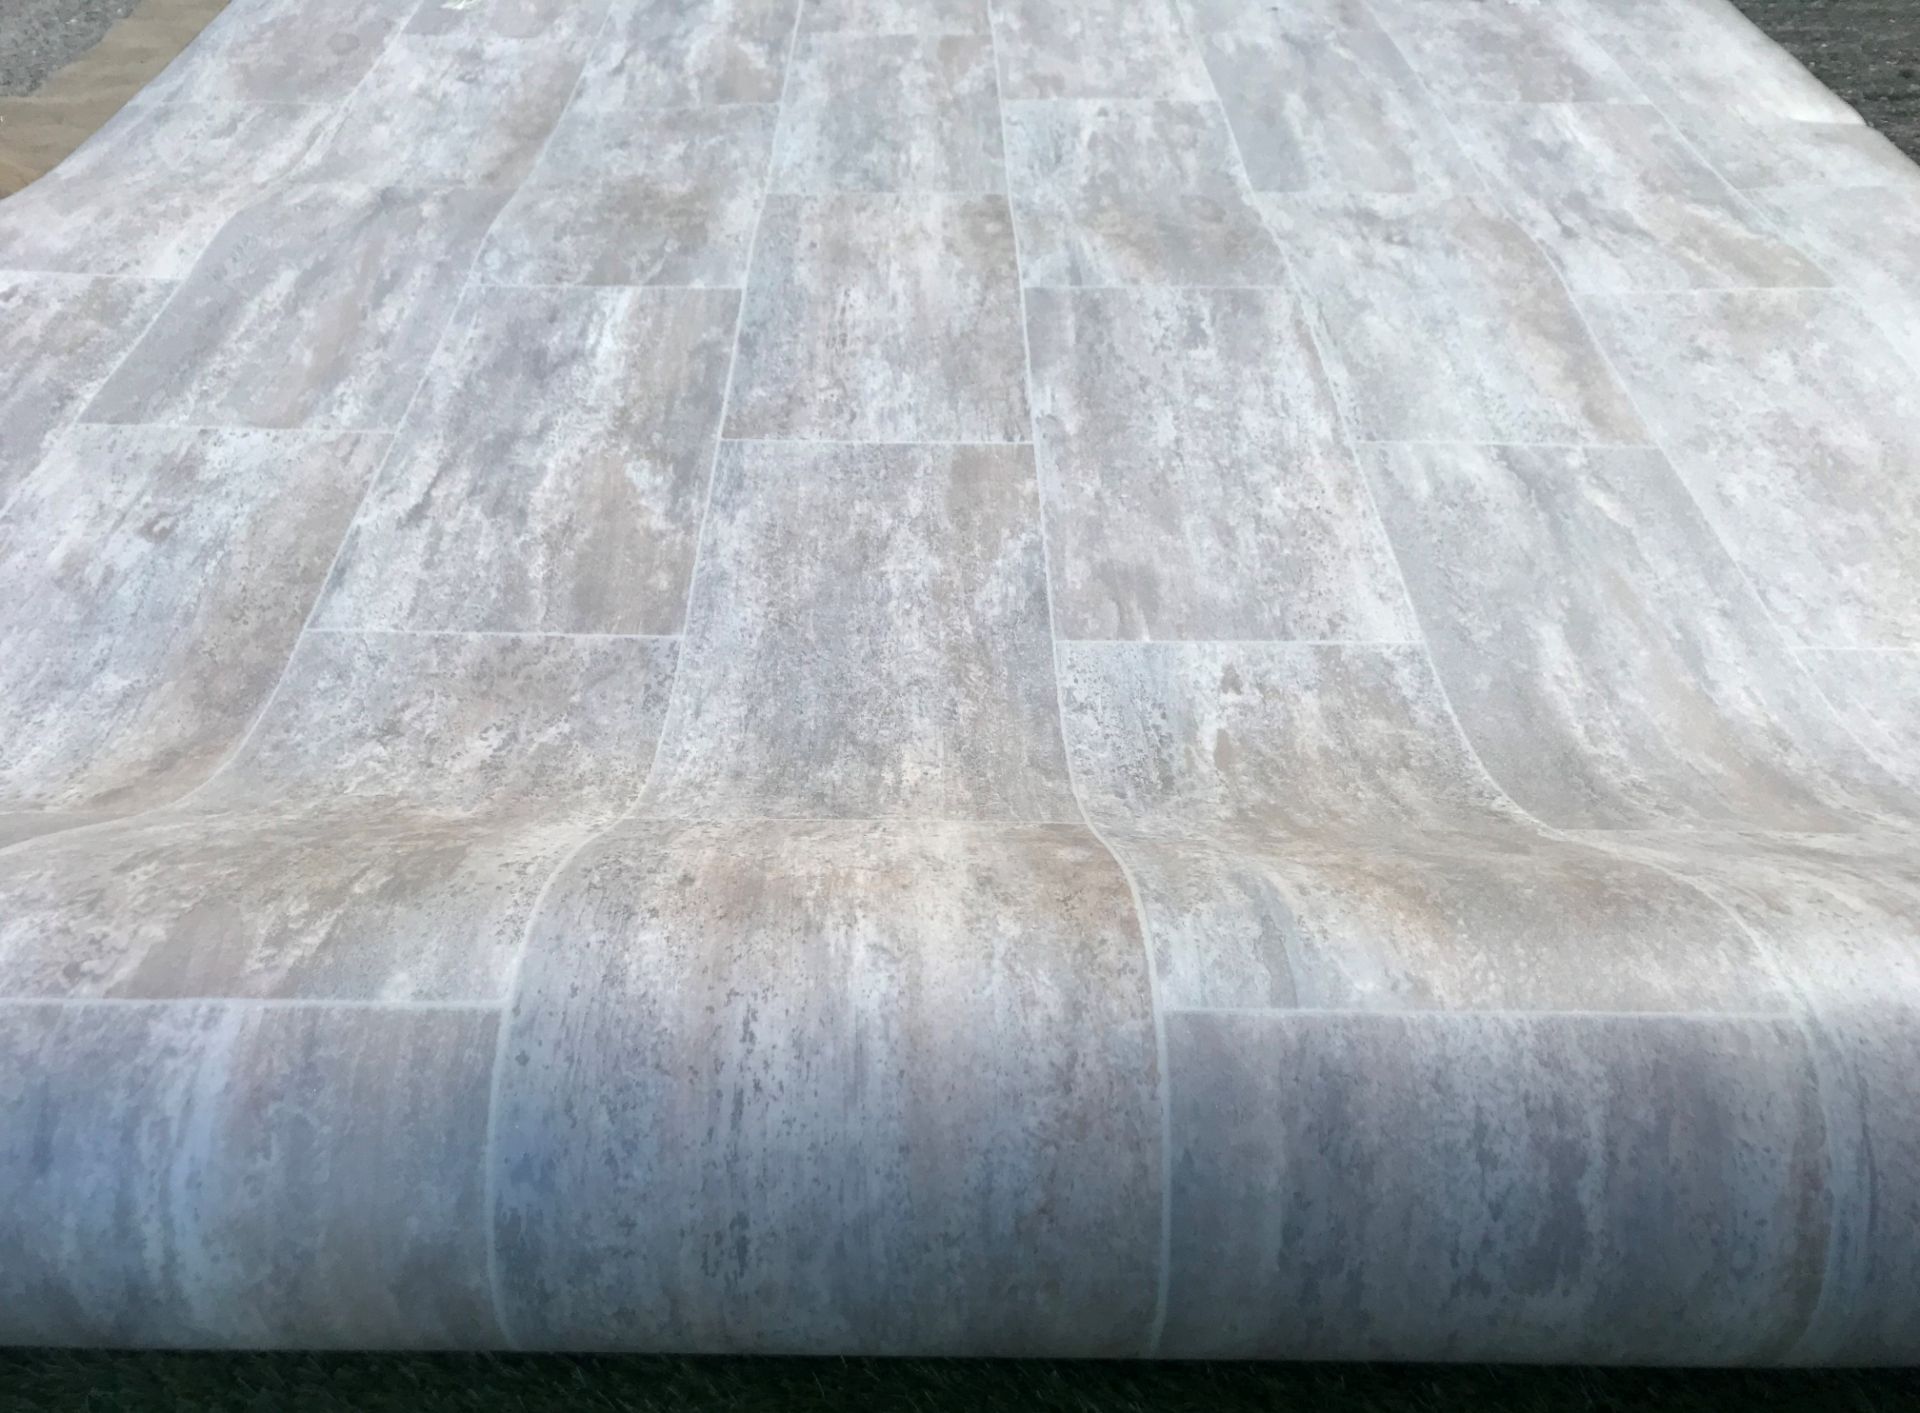 1 x GERFLOR Tarkett Commercial Safety Flooring In Melbourne Tile Design - 10.8X2 Meter Roll - Ref: